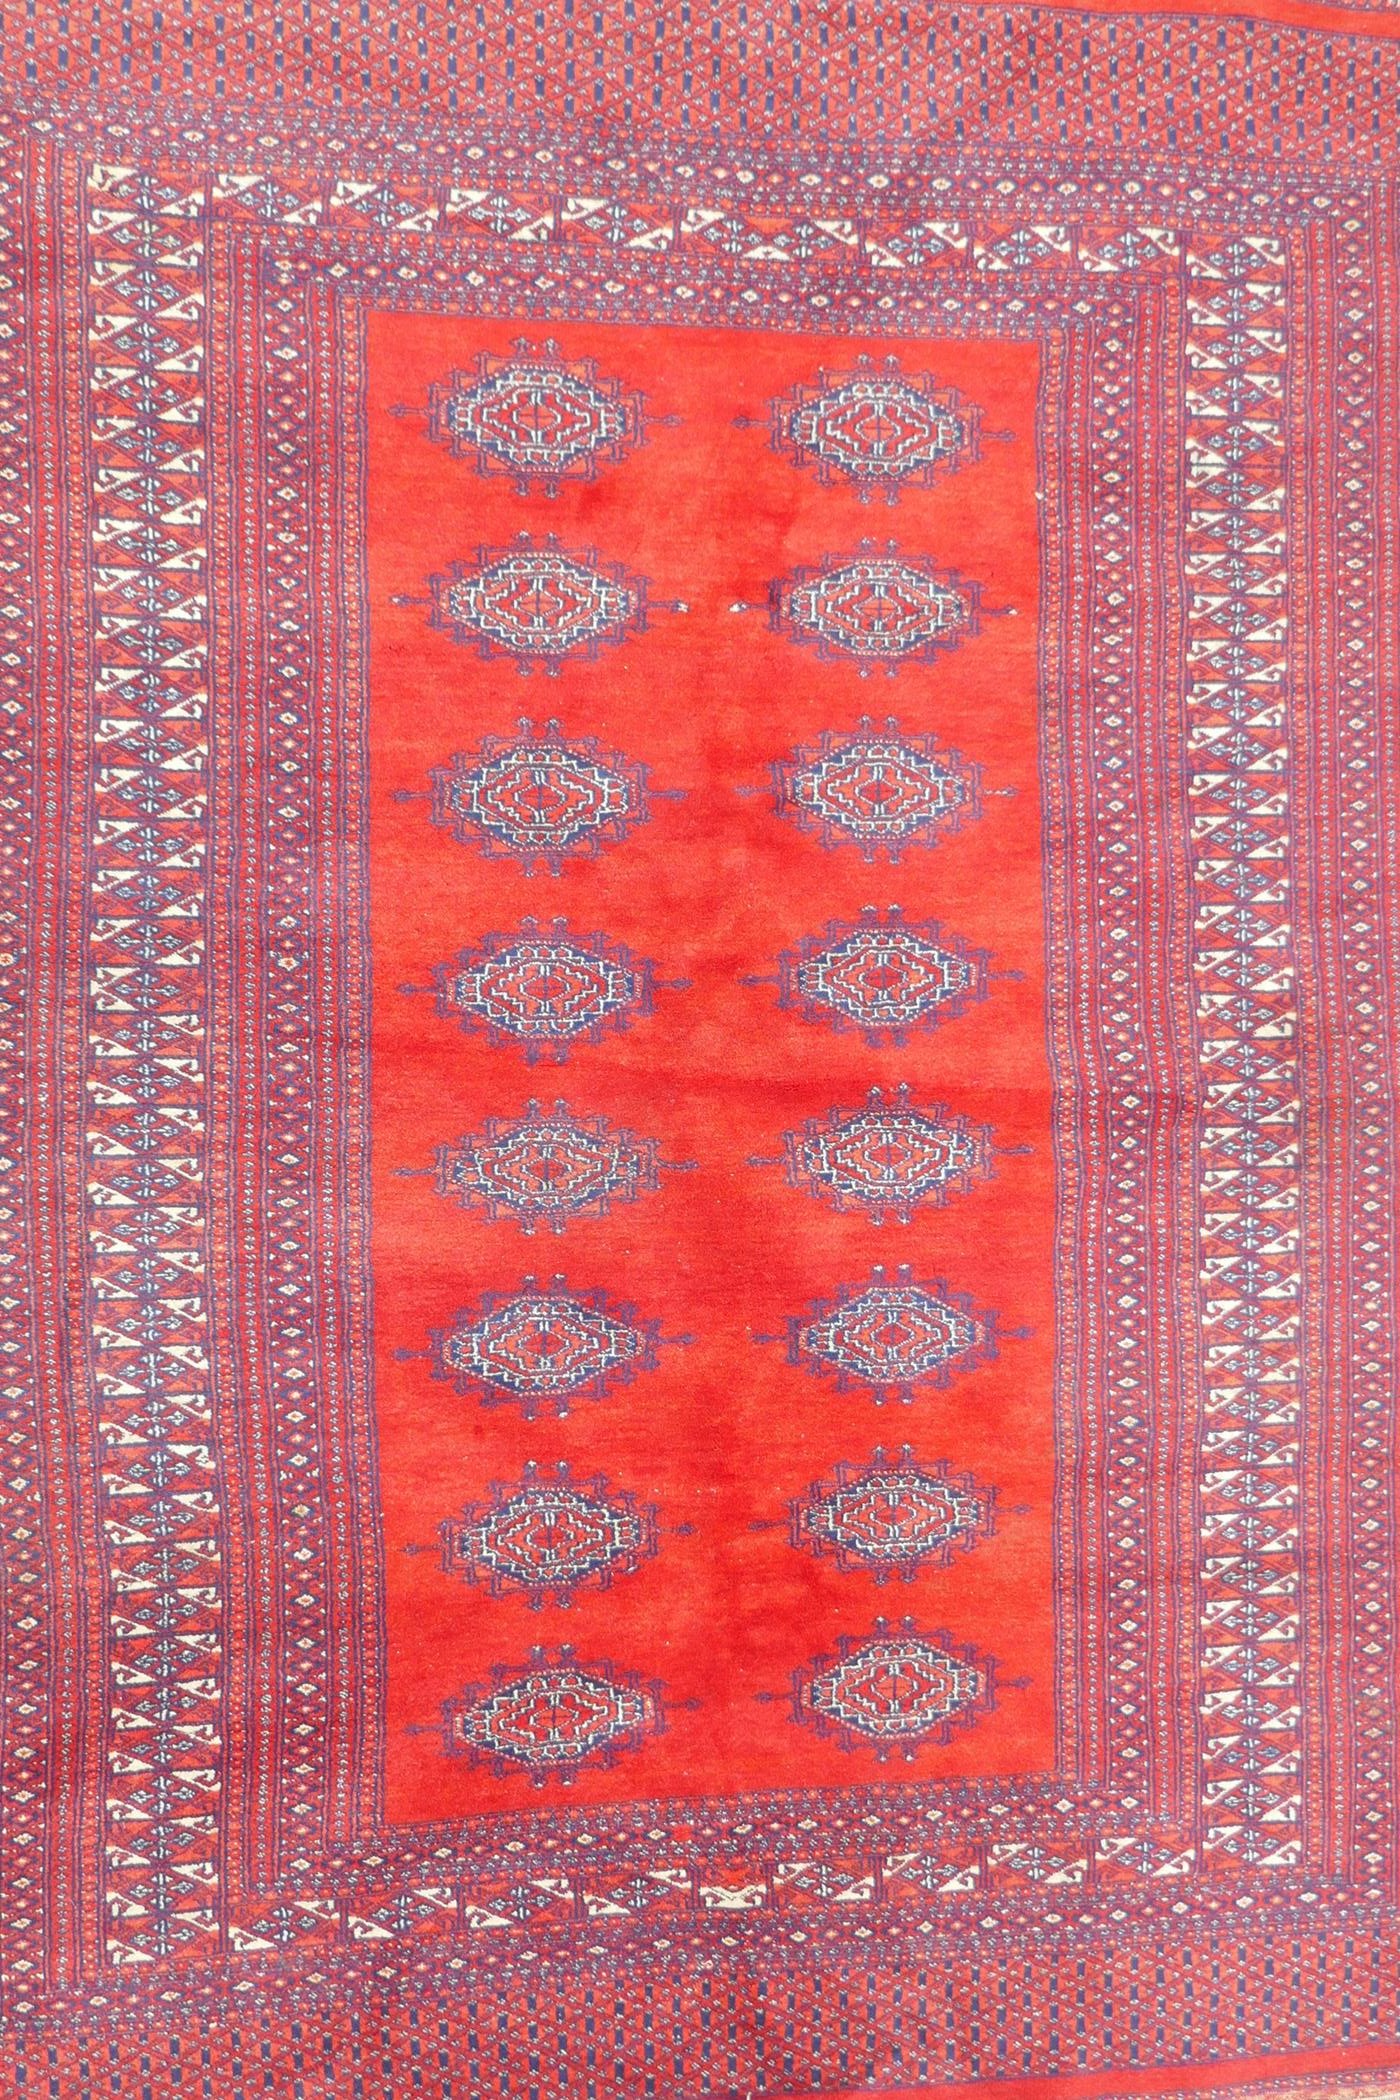 A Turkmen tomato ground wool carpet with a Bokhara design, 51" x 72"